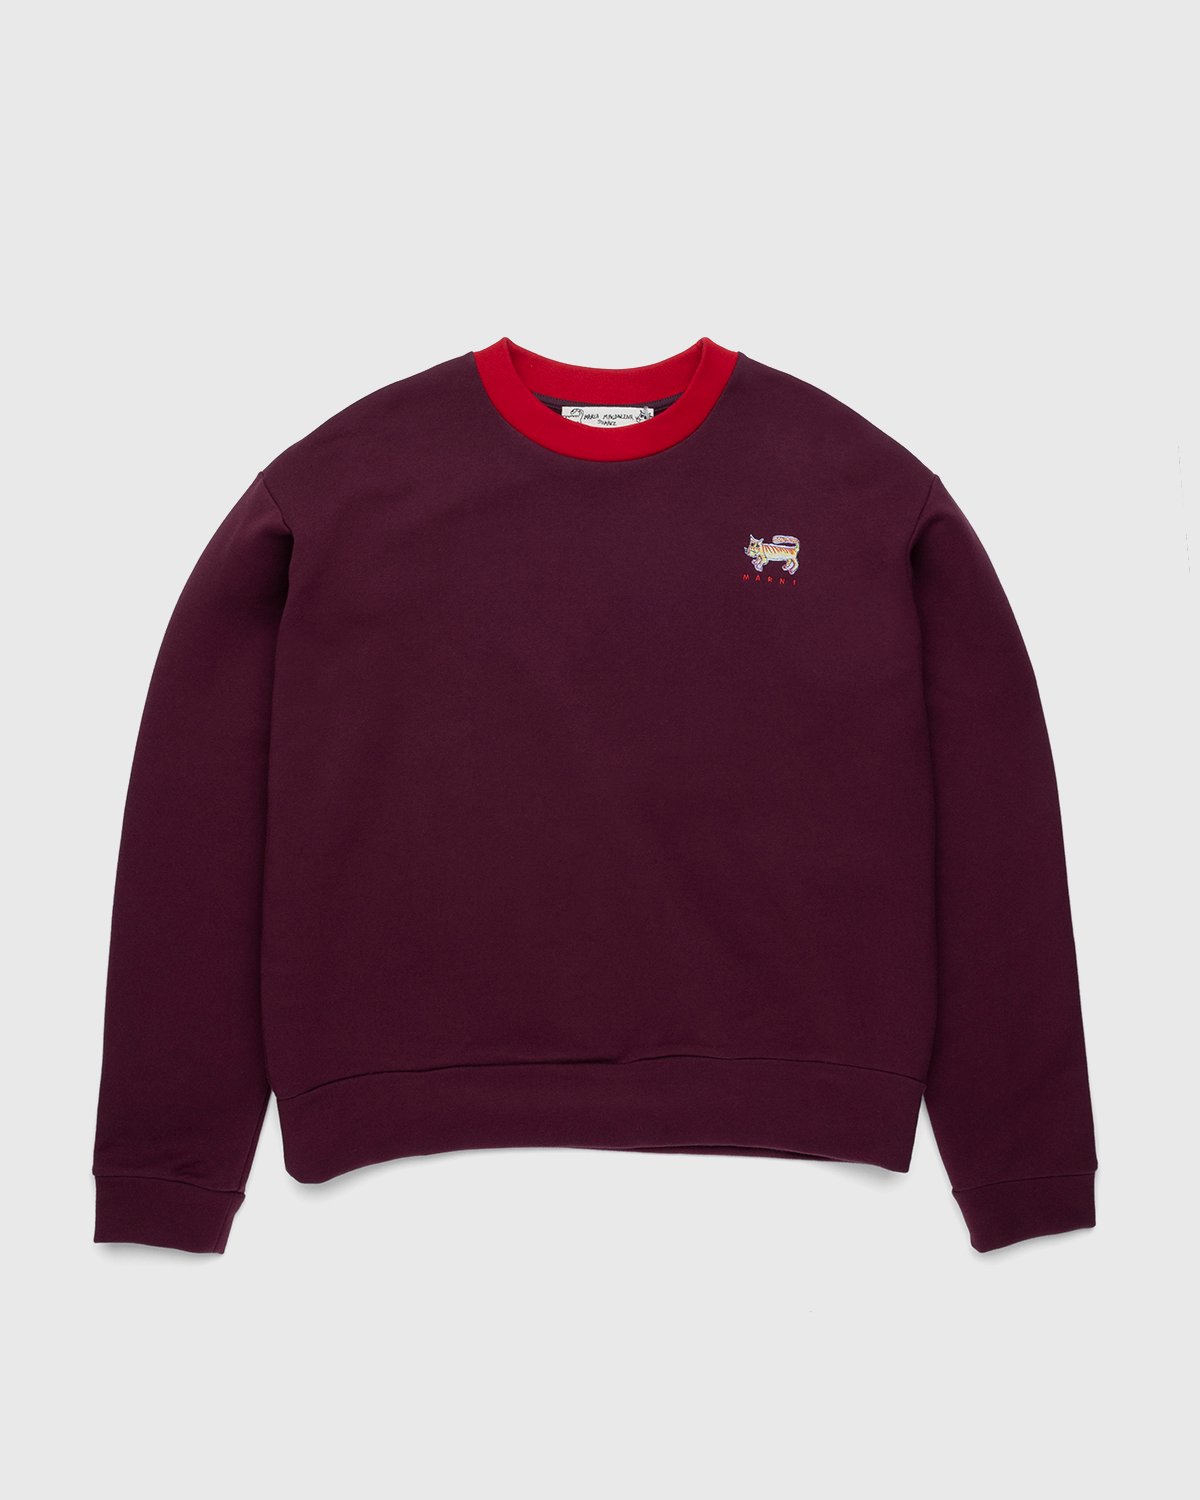 Marni - Logo-Embroidered Sweatshirt Burgundy - Clothing - Red - Image 1